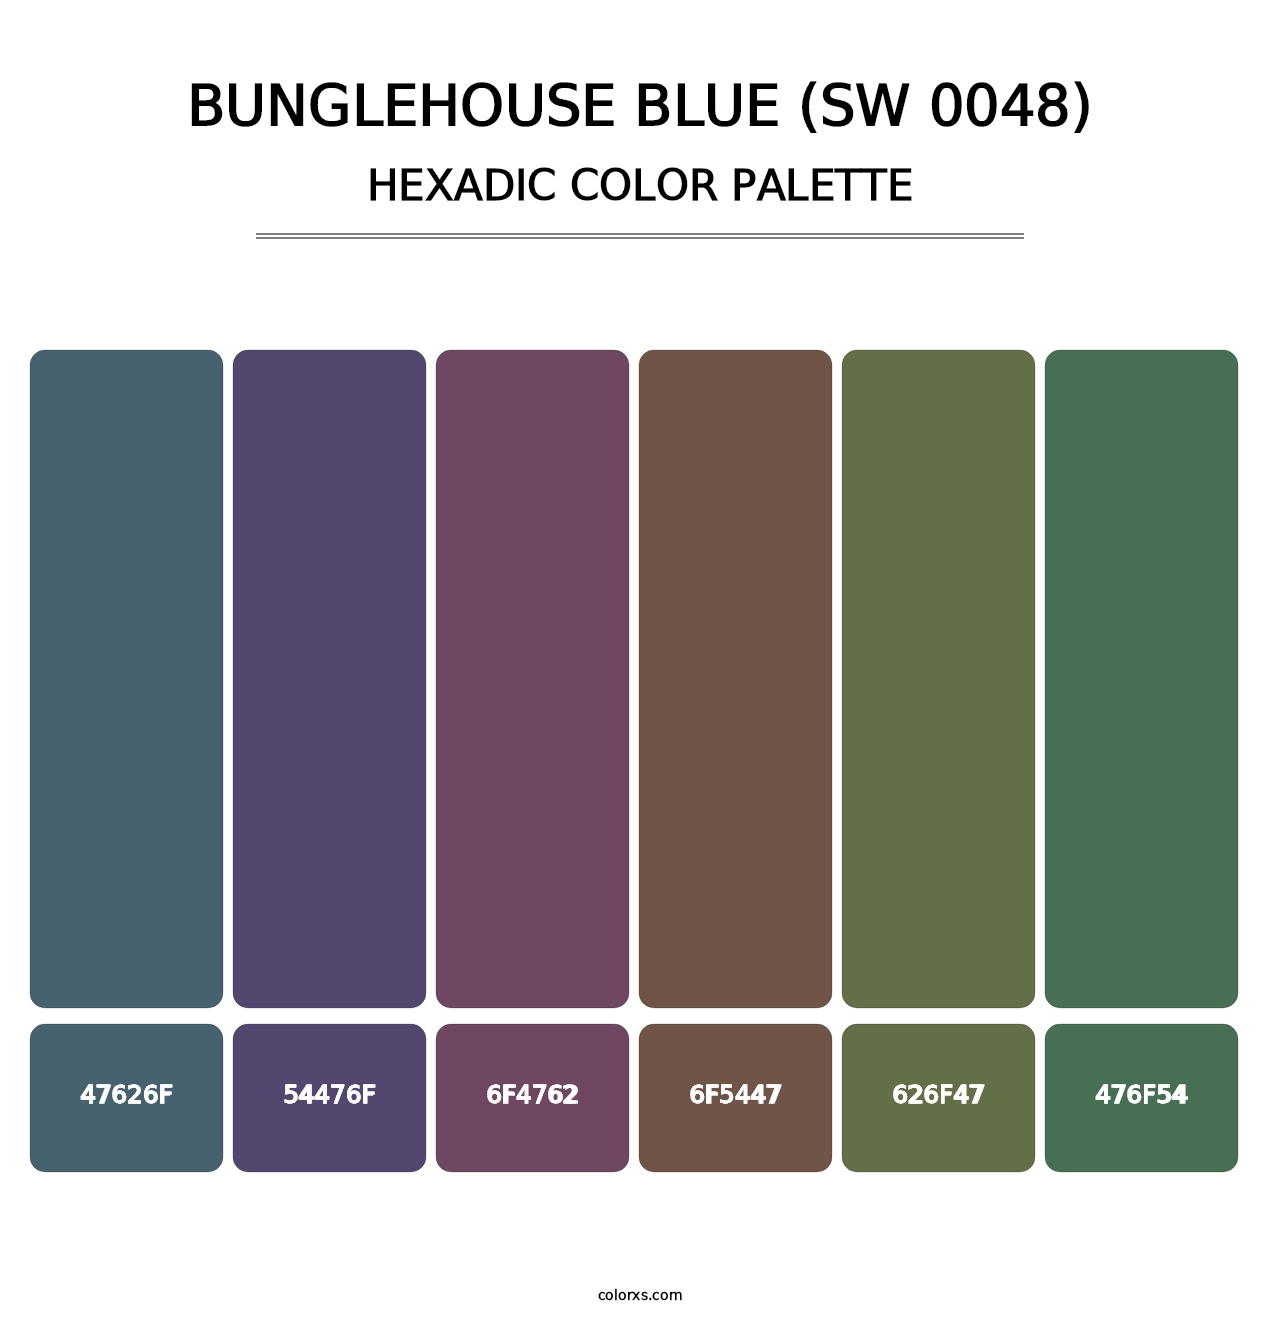 Bunglehouse Blue (SW 0048) - Hexadic Color Palette